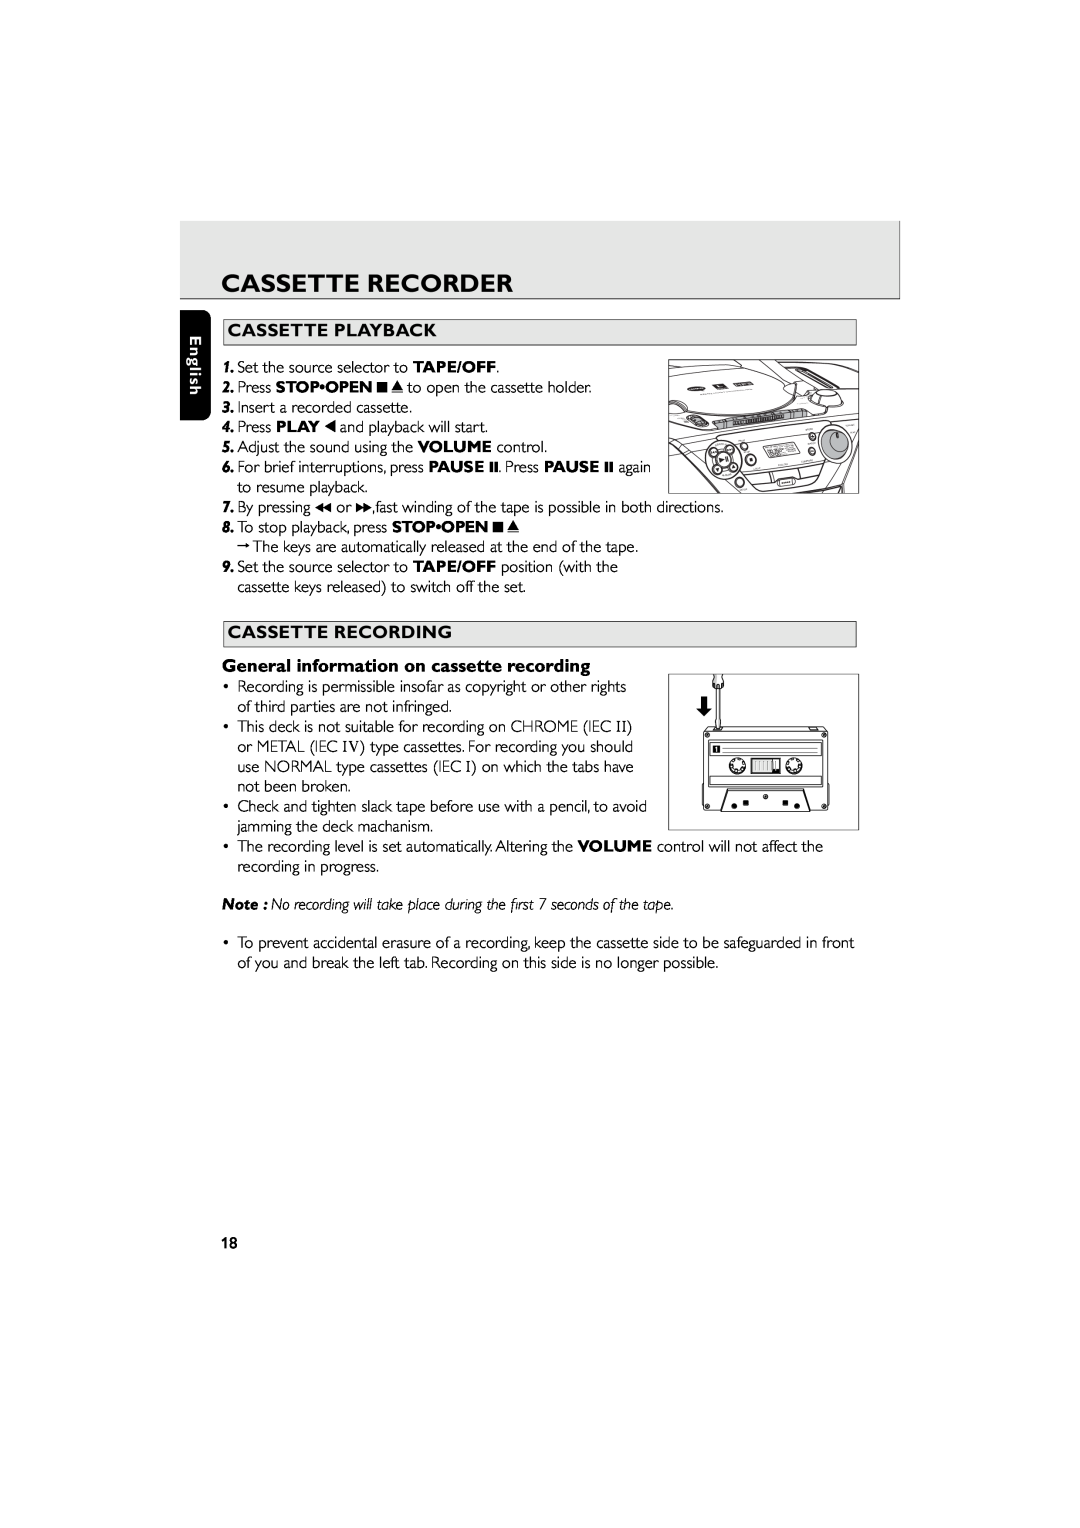 Philips AZ 6188 manual Cassette Recorder, Cassette Playback, Cassette Recording, General information on cassette recording 